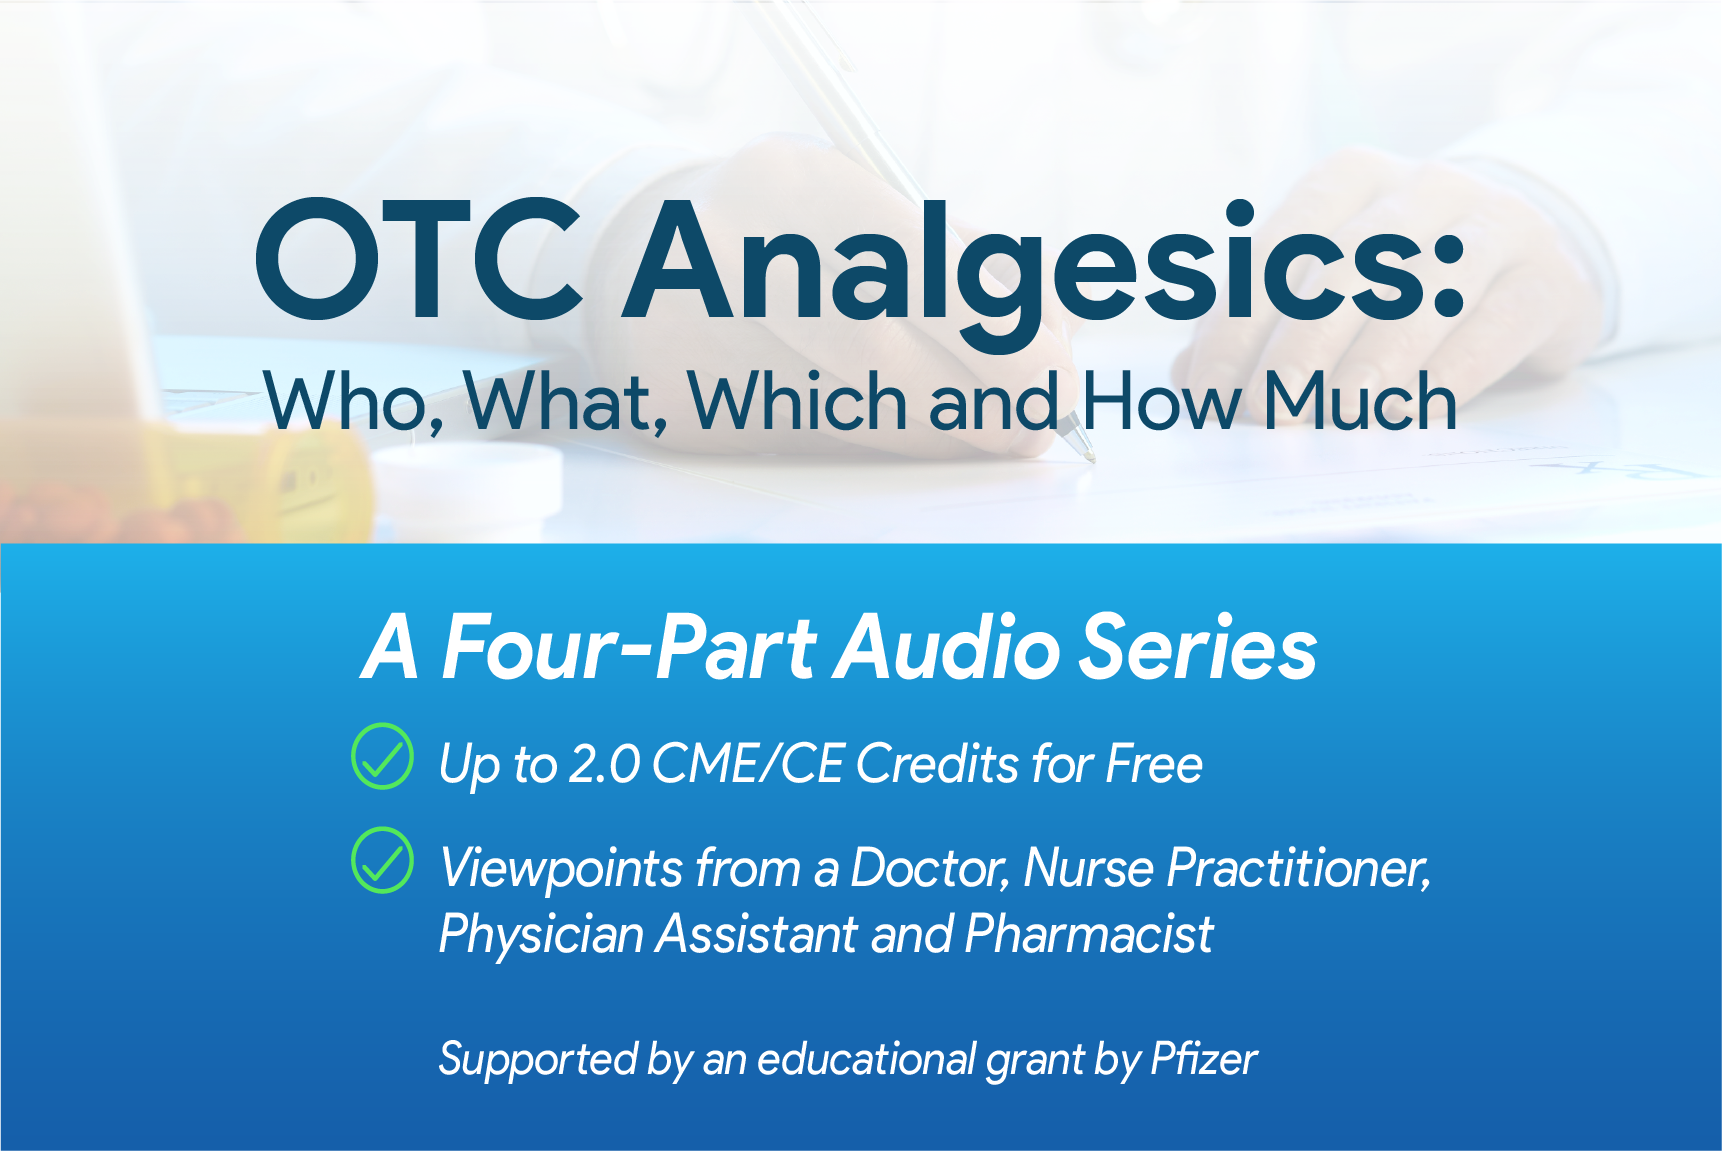 OTC (Over the Counter) Analgesics: A Four-Part Audio Series